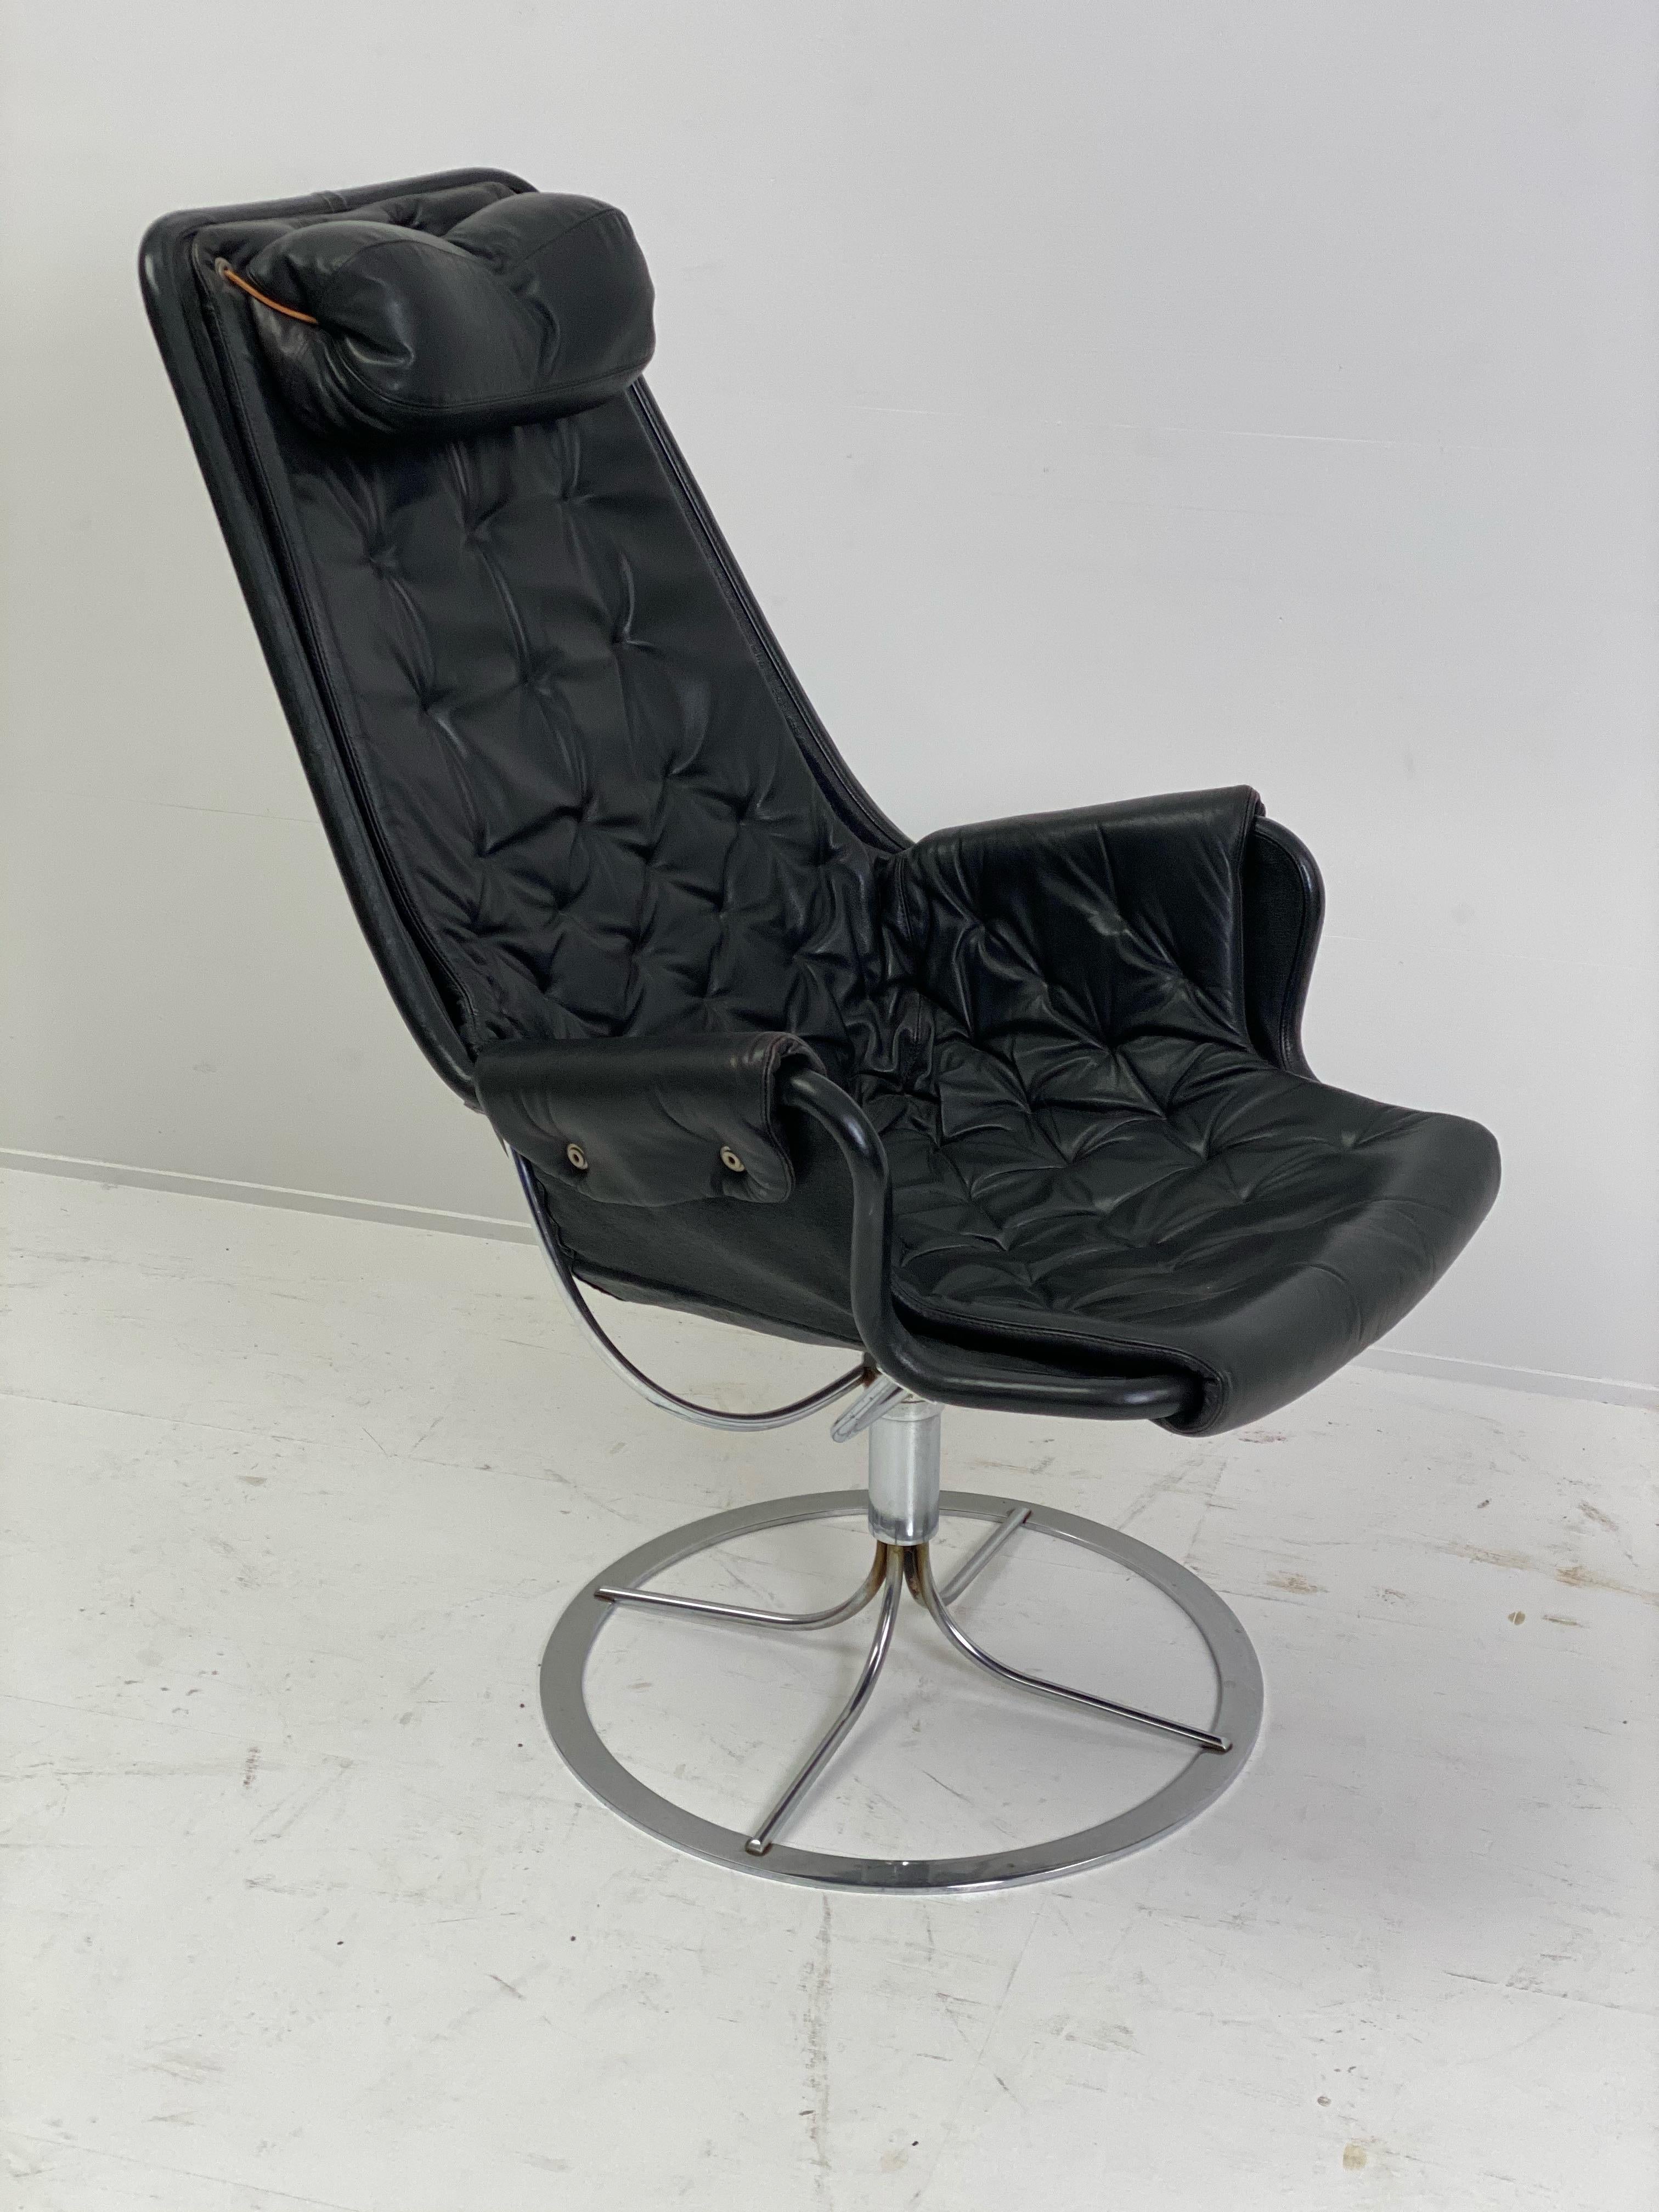 jetson chair